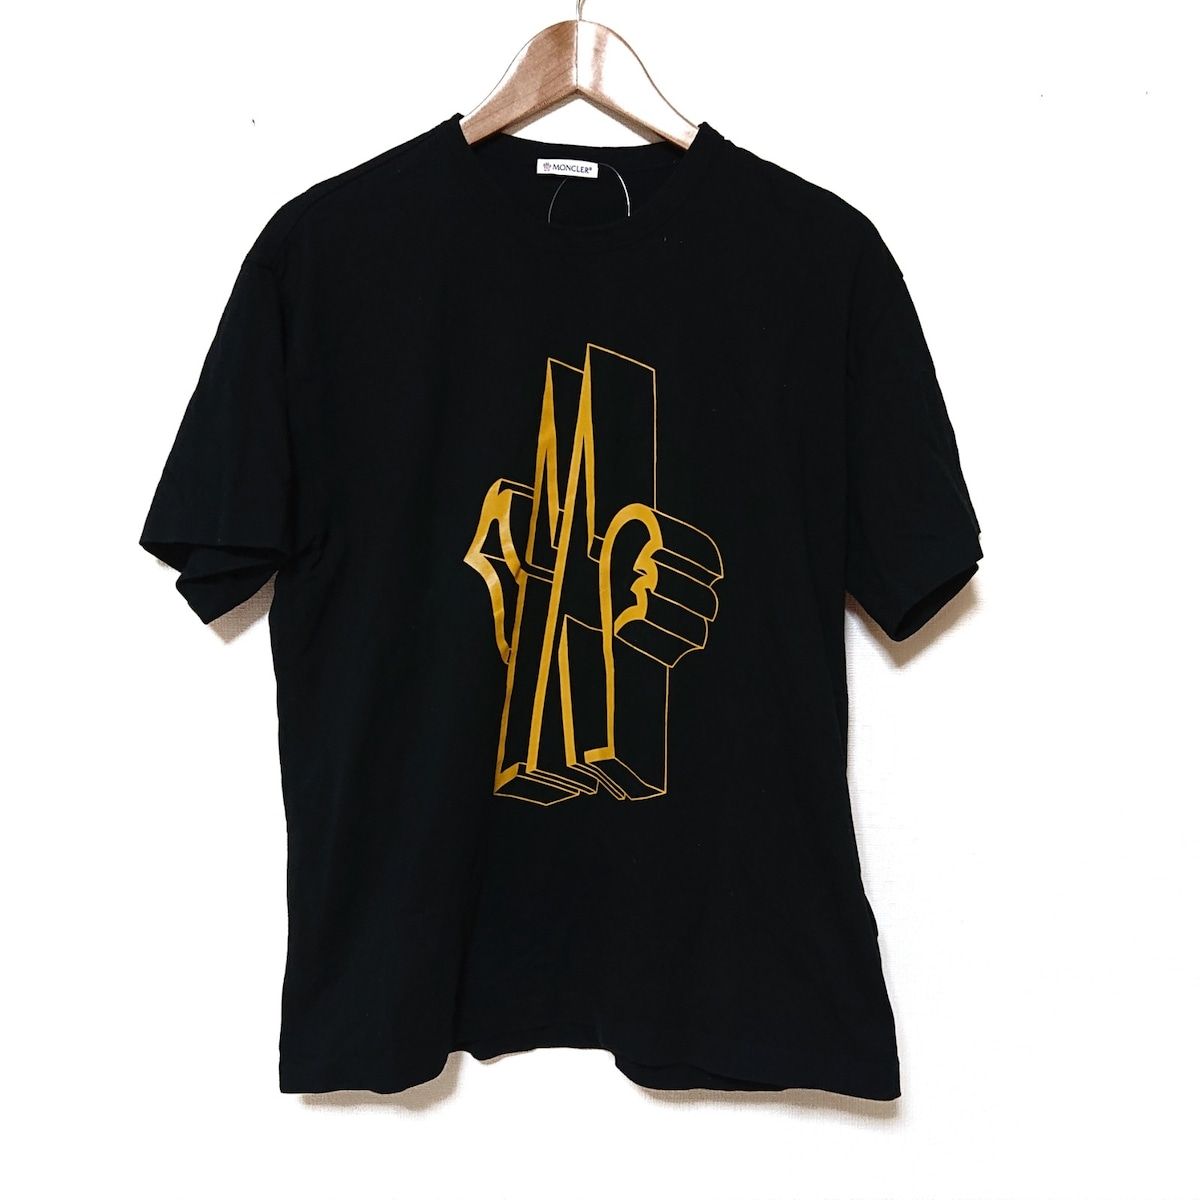 MONCLER(モンクレール) 半袖Tシャツ サイズL メンズ - 黒×イエロー クルーネック